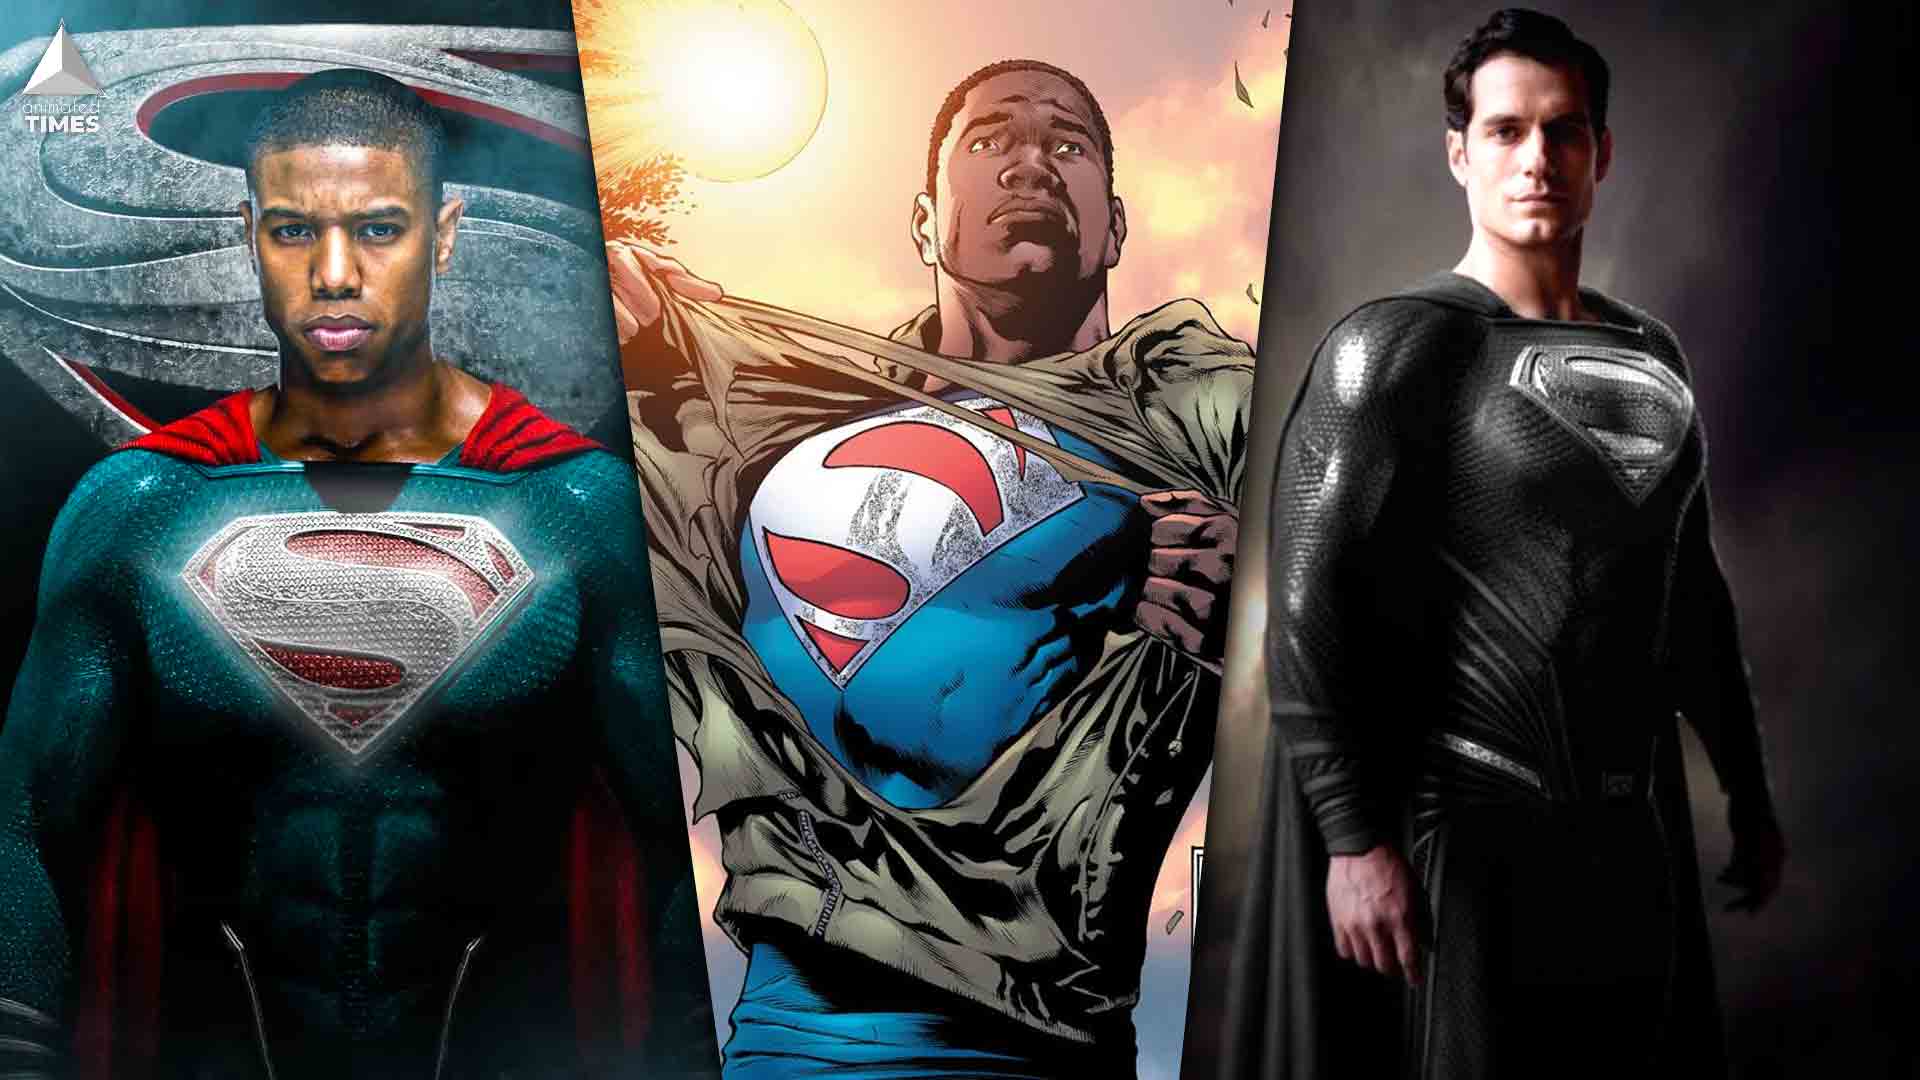 Will The New Superman Movie Have Krypton Origins?